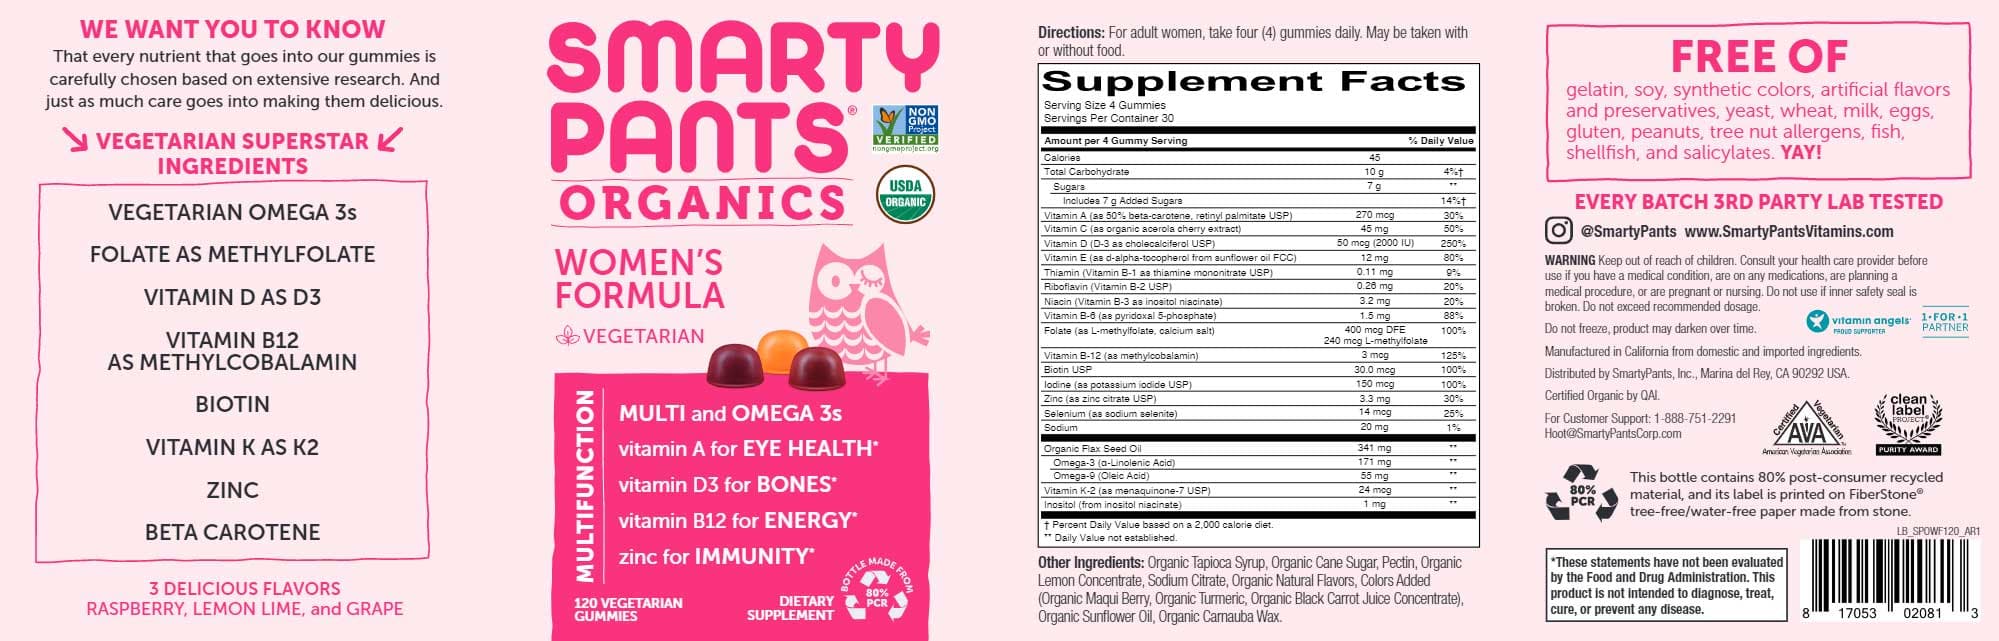 SmartyPants Women's Organic Formula Ingredients